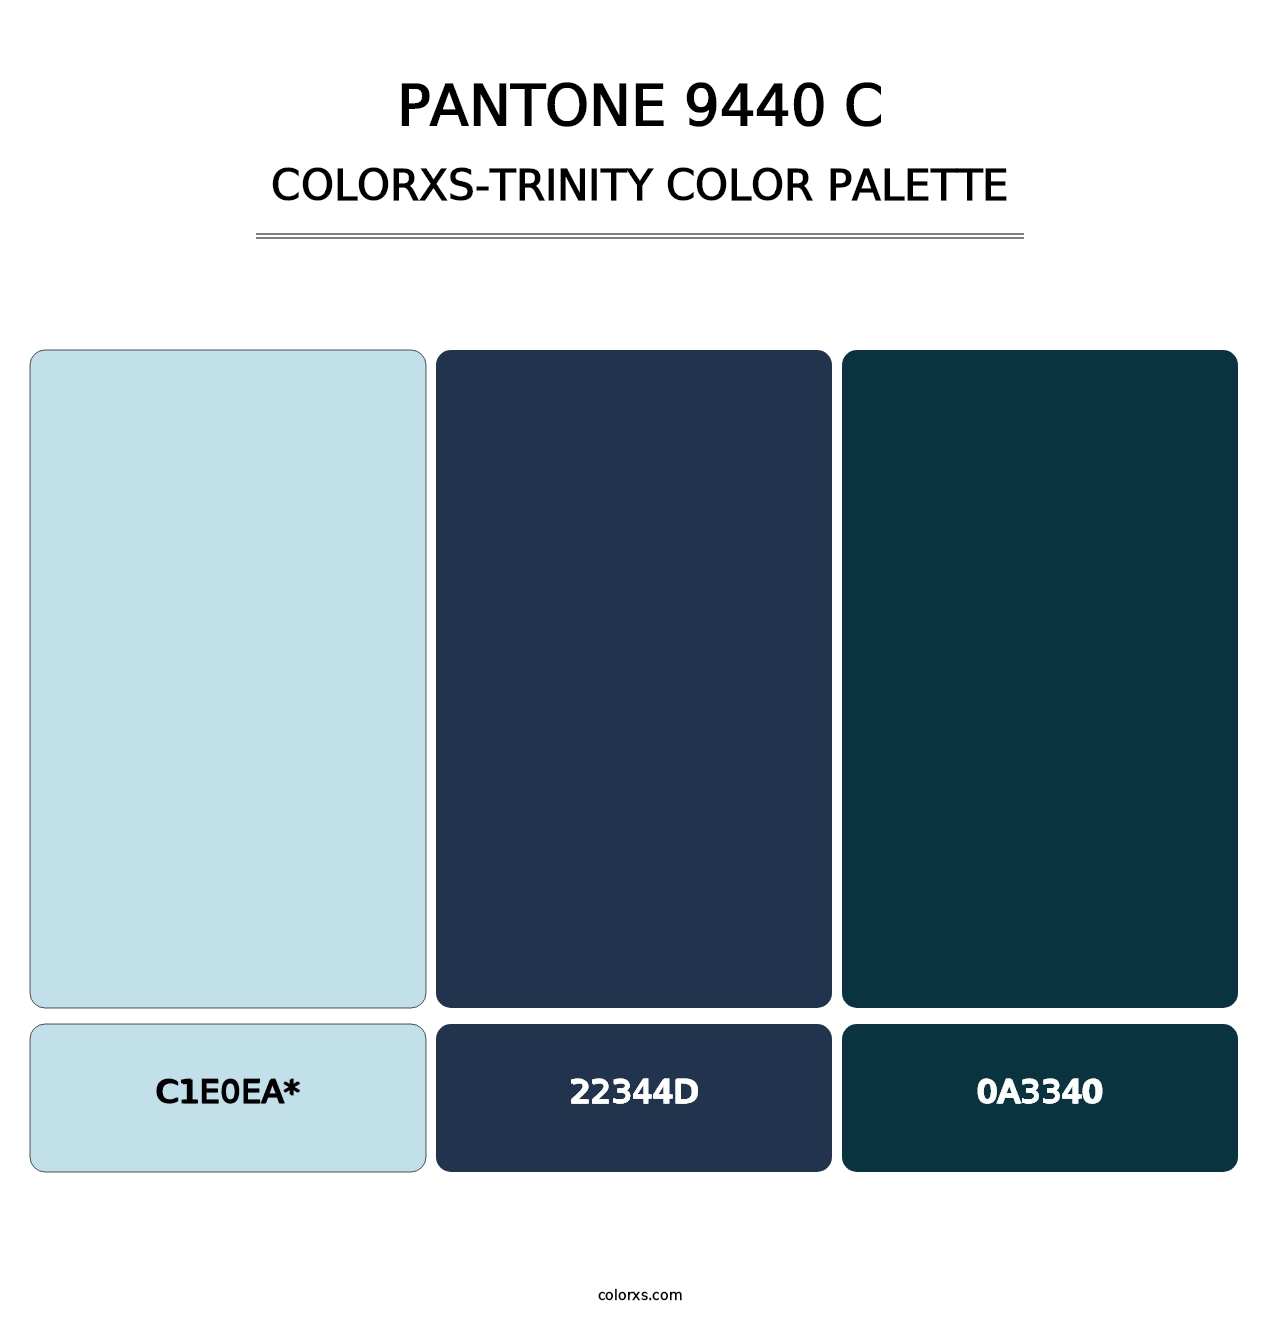 PANTONE 9440 C - Colorxs Trinity Palette